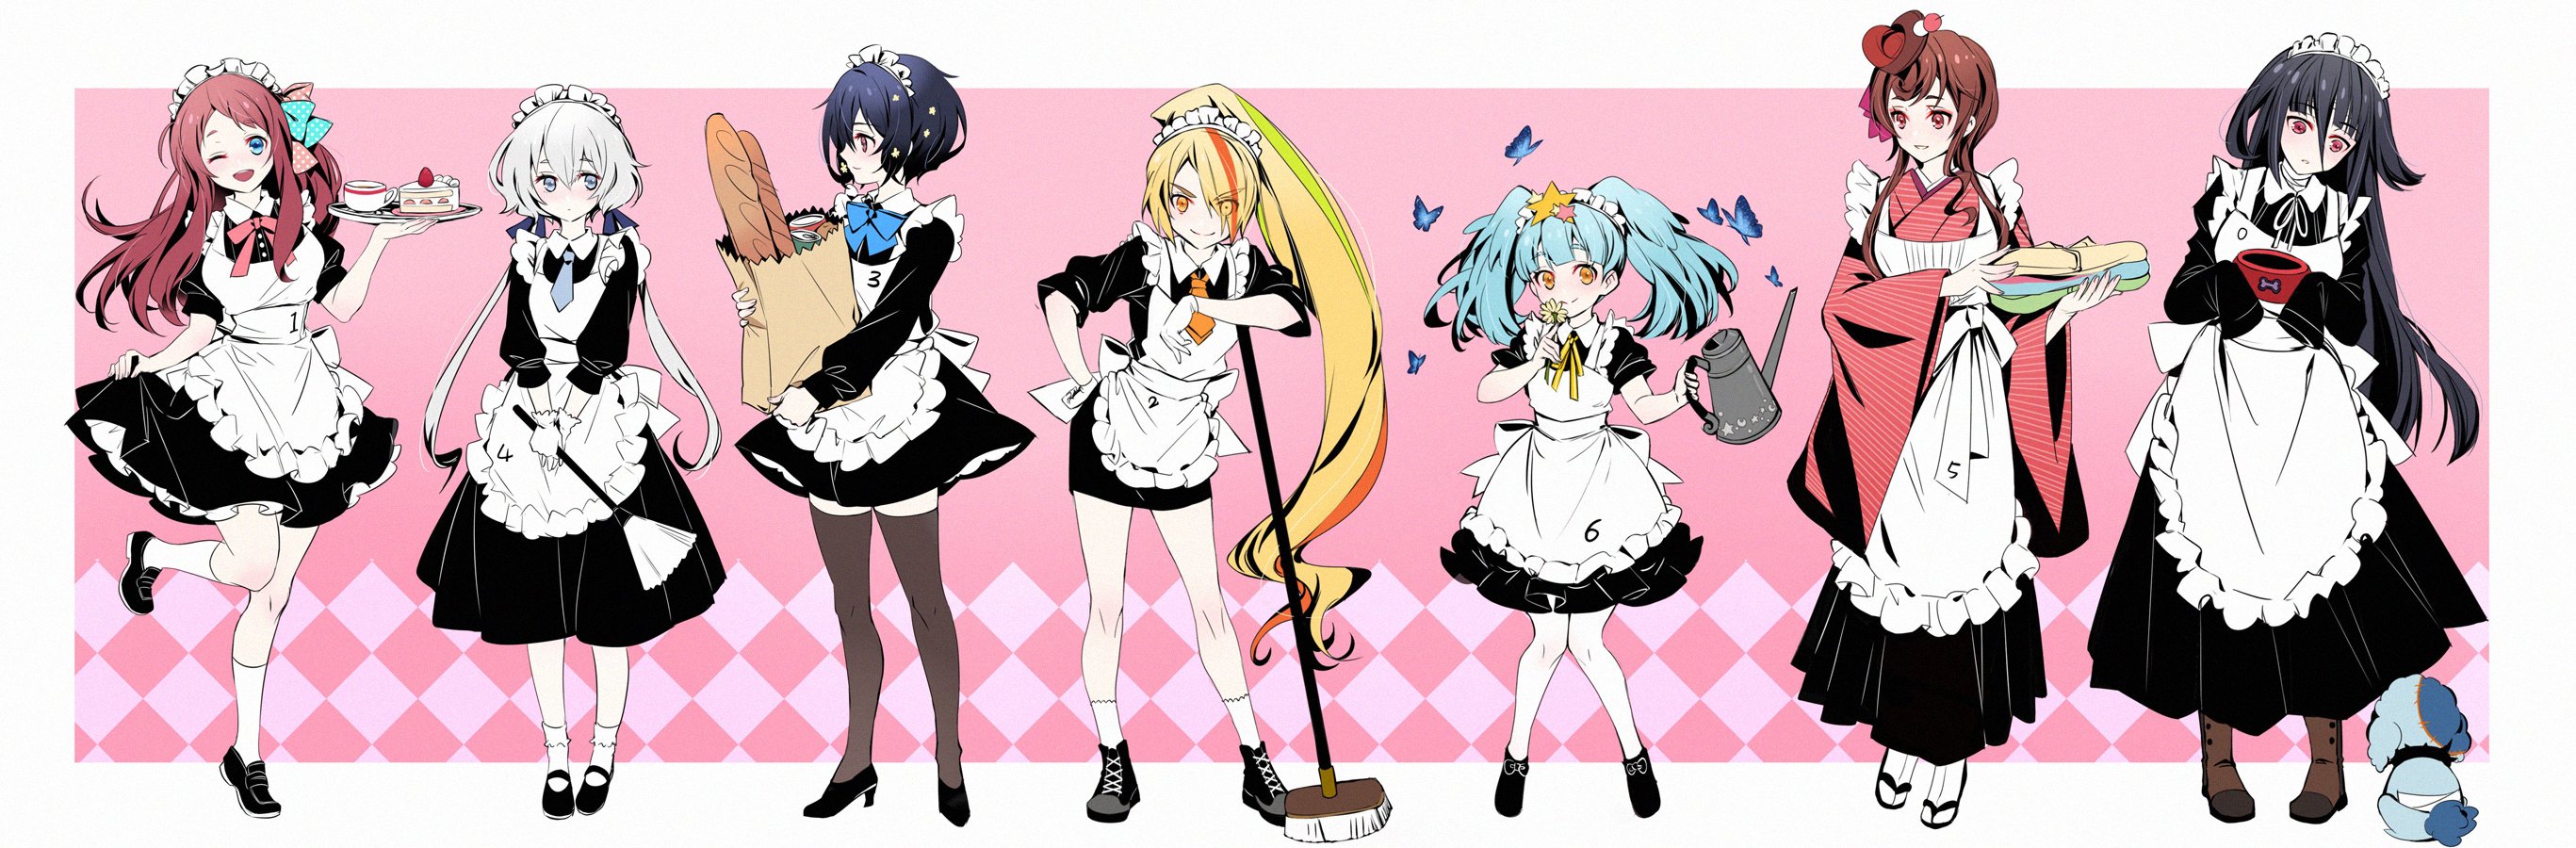 Zombie maids